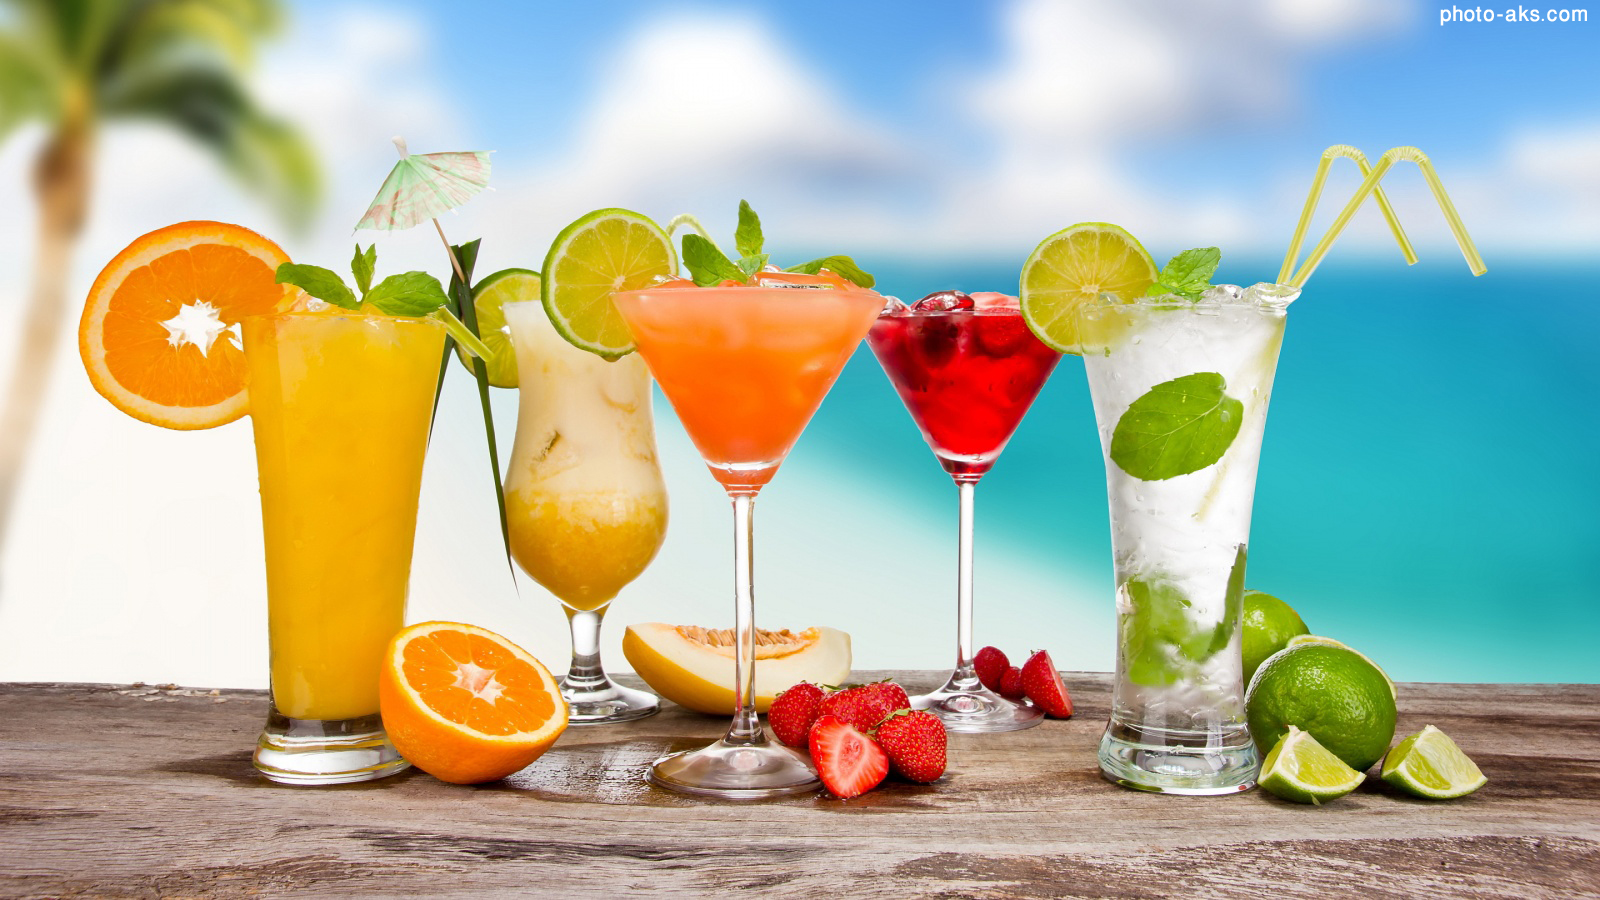 beach-party-drinks.jpg